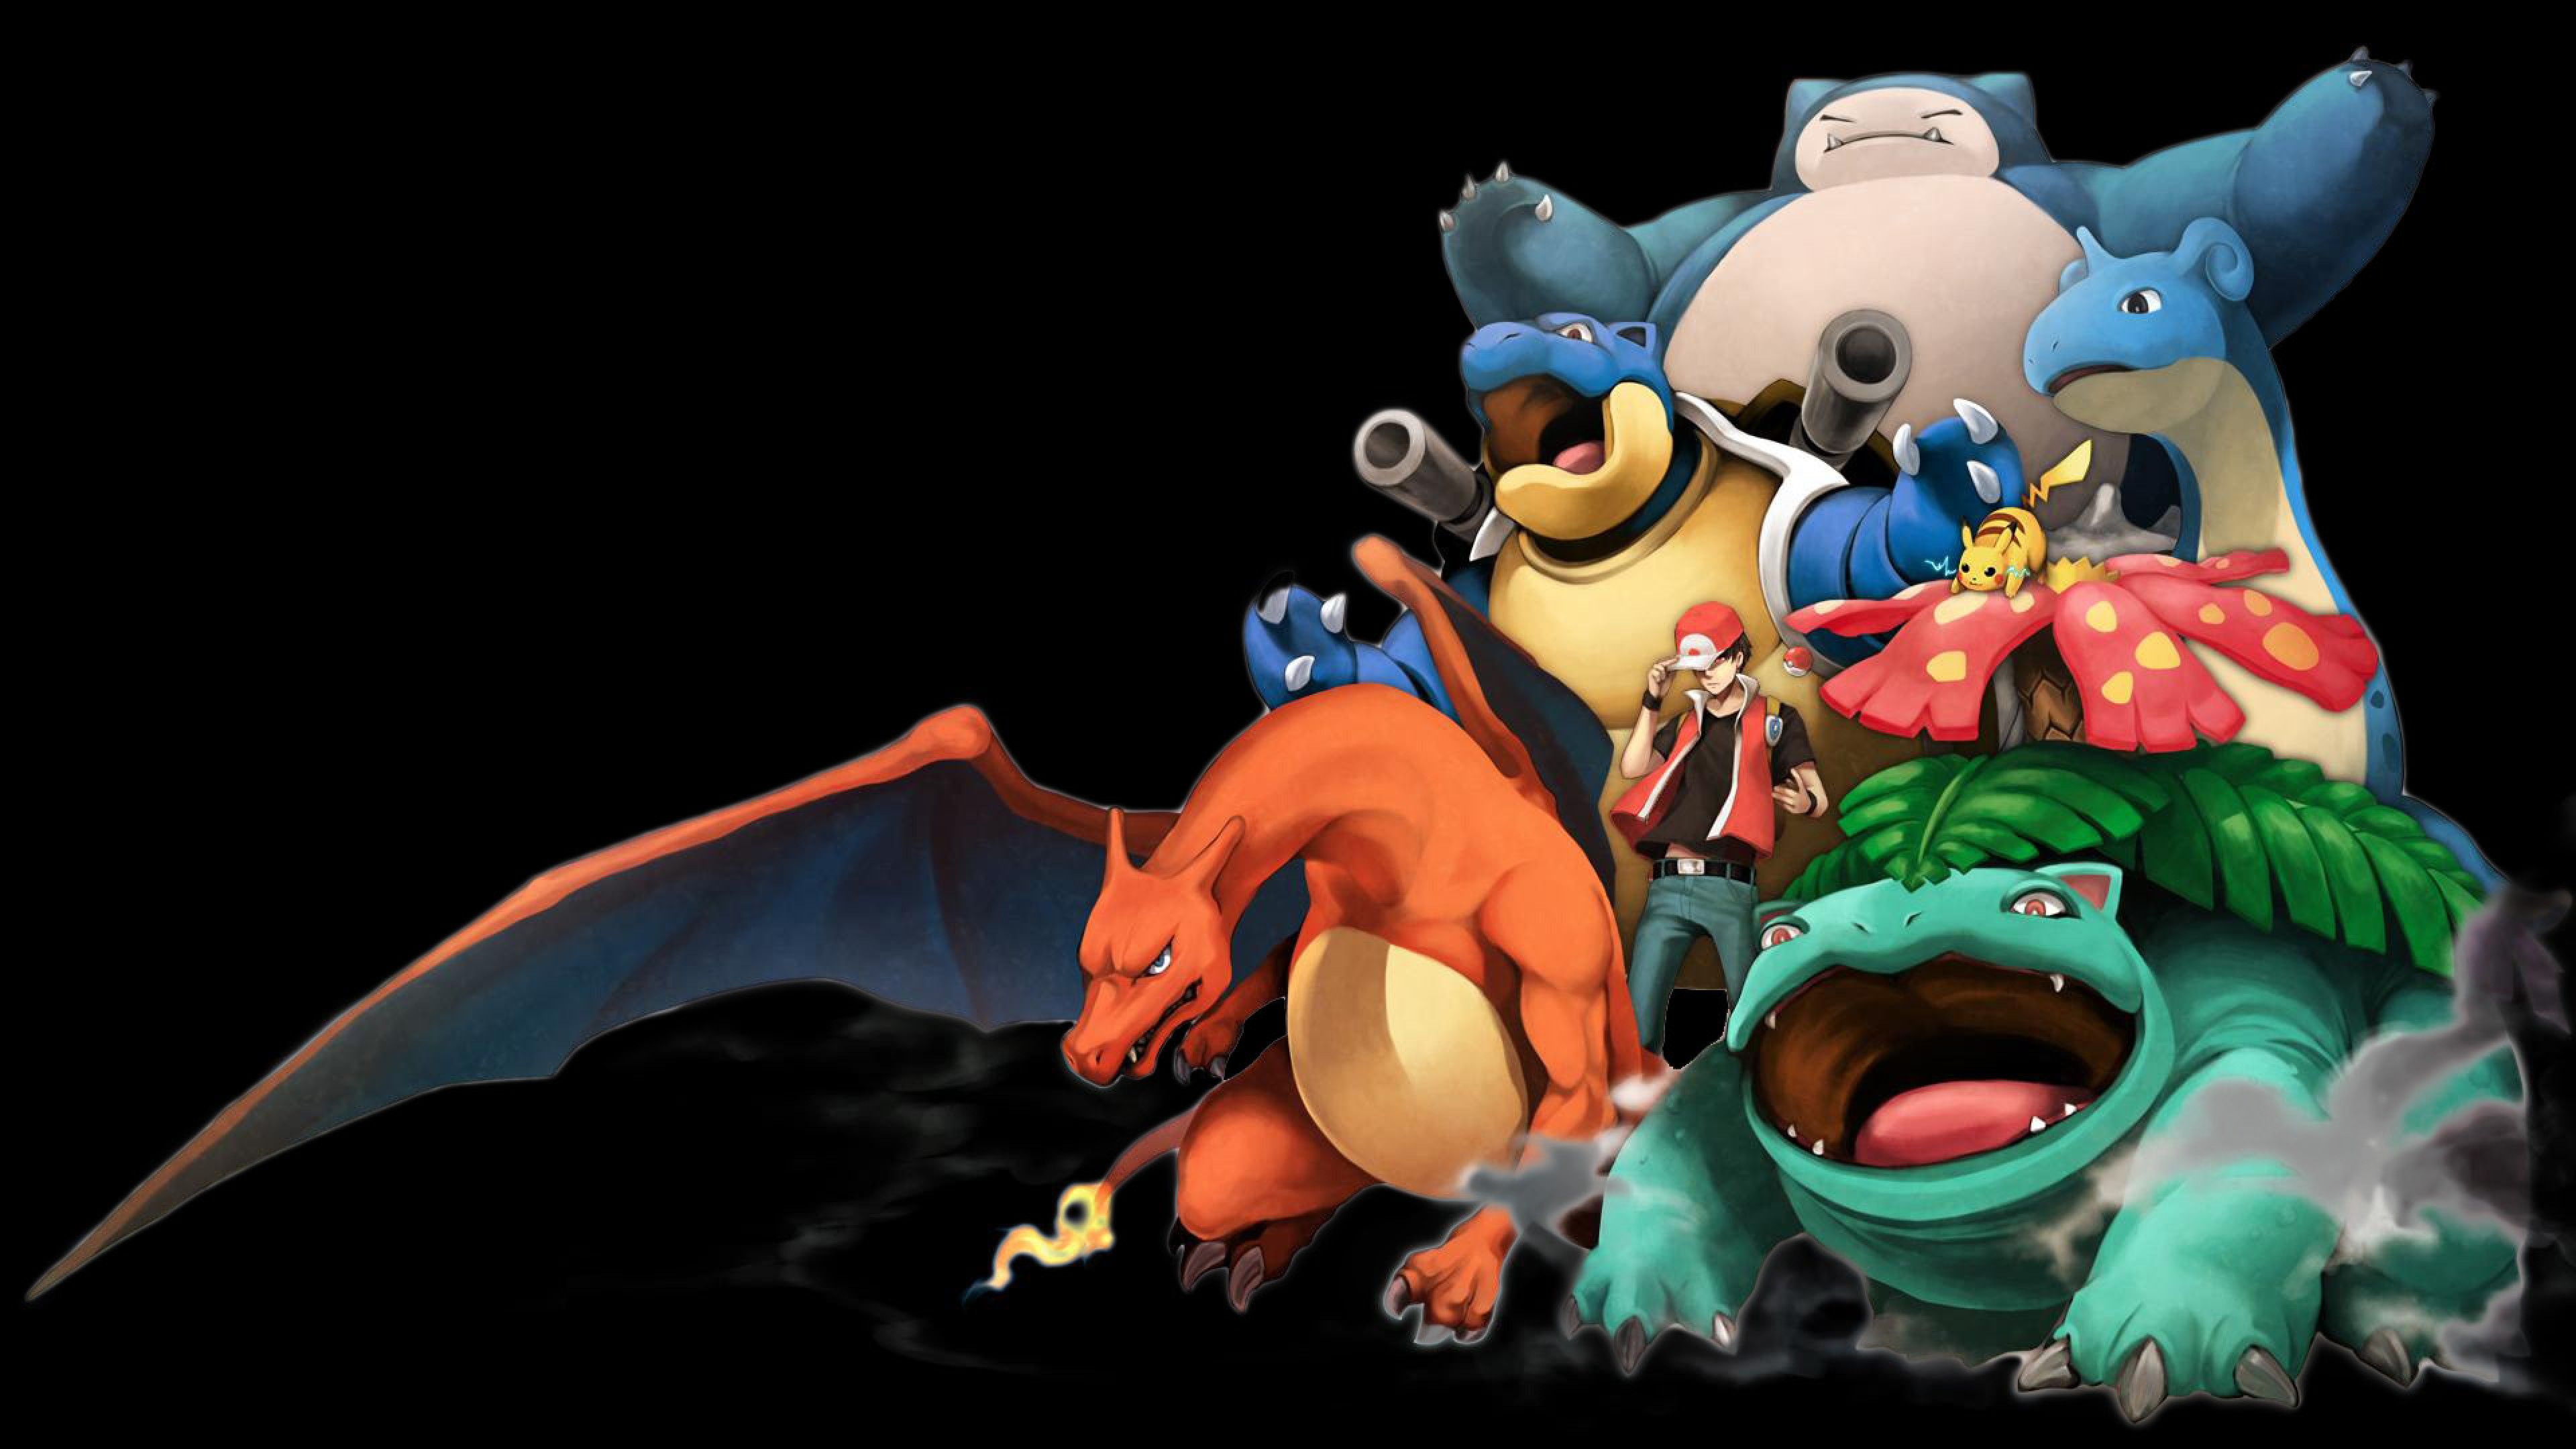 Anime Pokémon 4k Ultra HD Wallpaper by Mark McGlashan